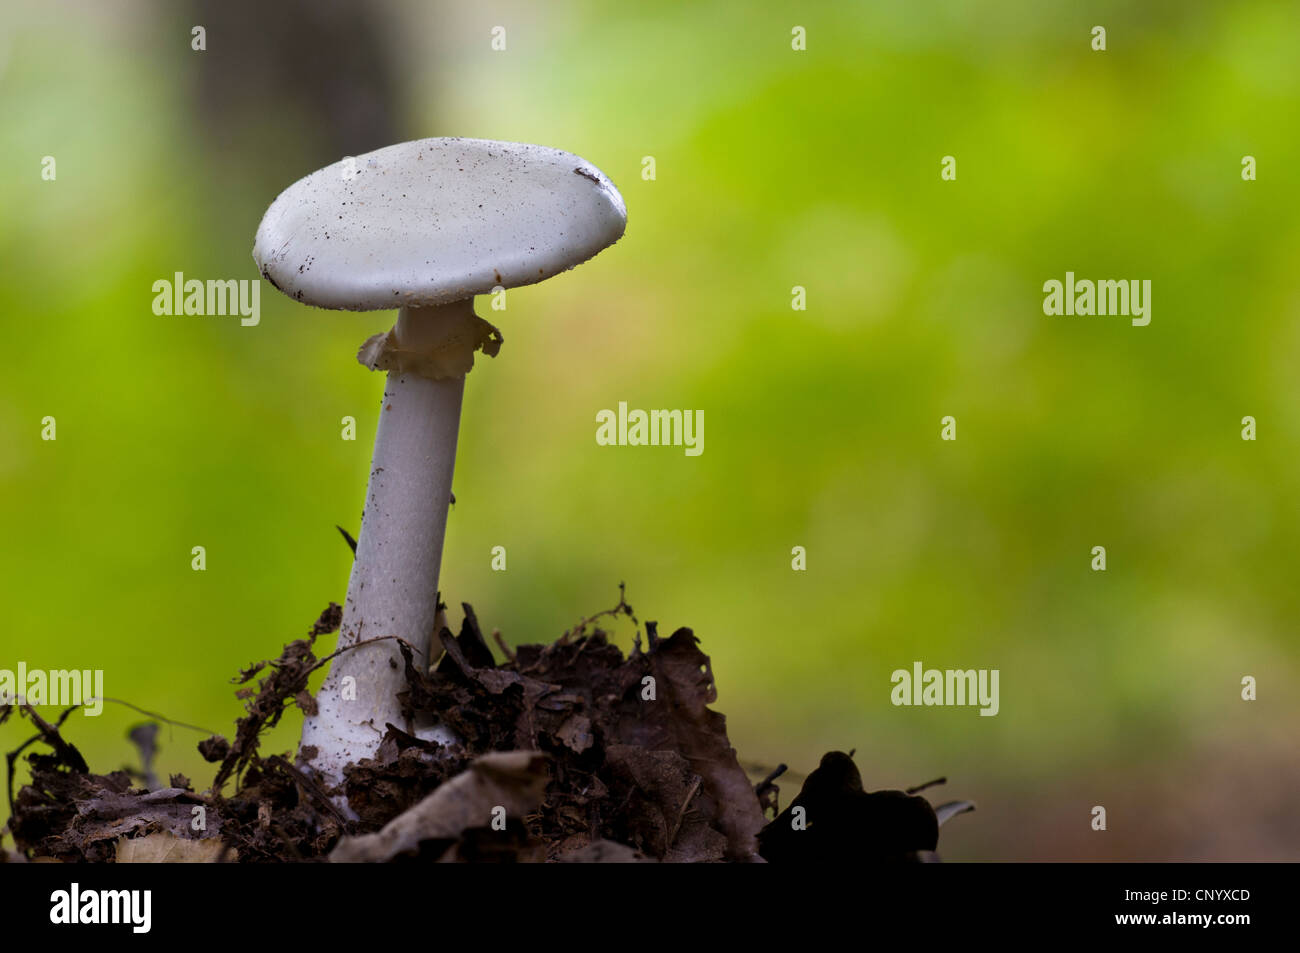 Eine falsche Deathcap Pilze (Amanita Citrina) wachsen in Laubstreu in Laubwald, Clumber Park, Nottinghamshire. Oktober. Stockfoto